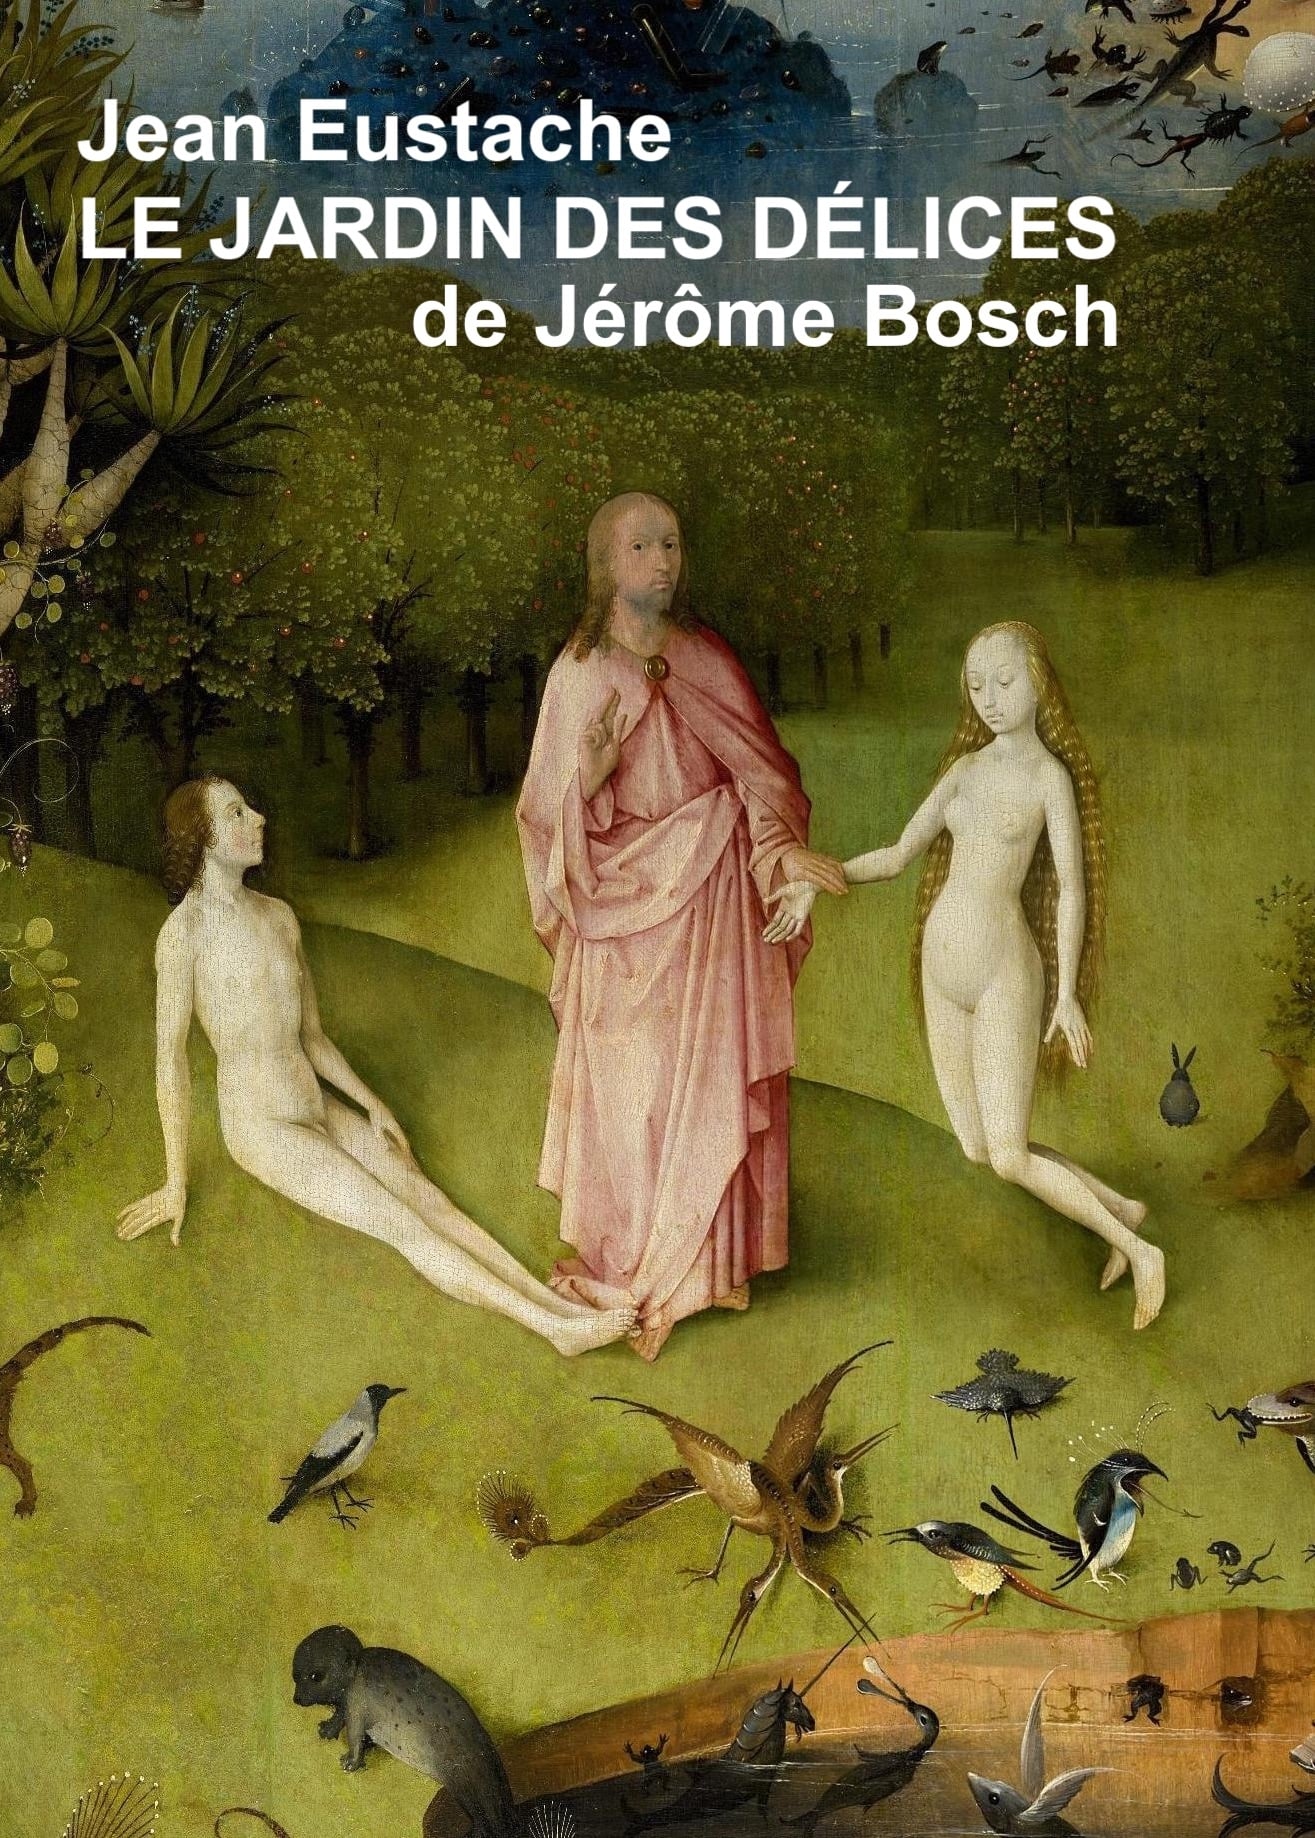 Hieronymus Bosch's Garden of Delights